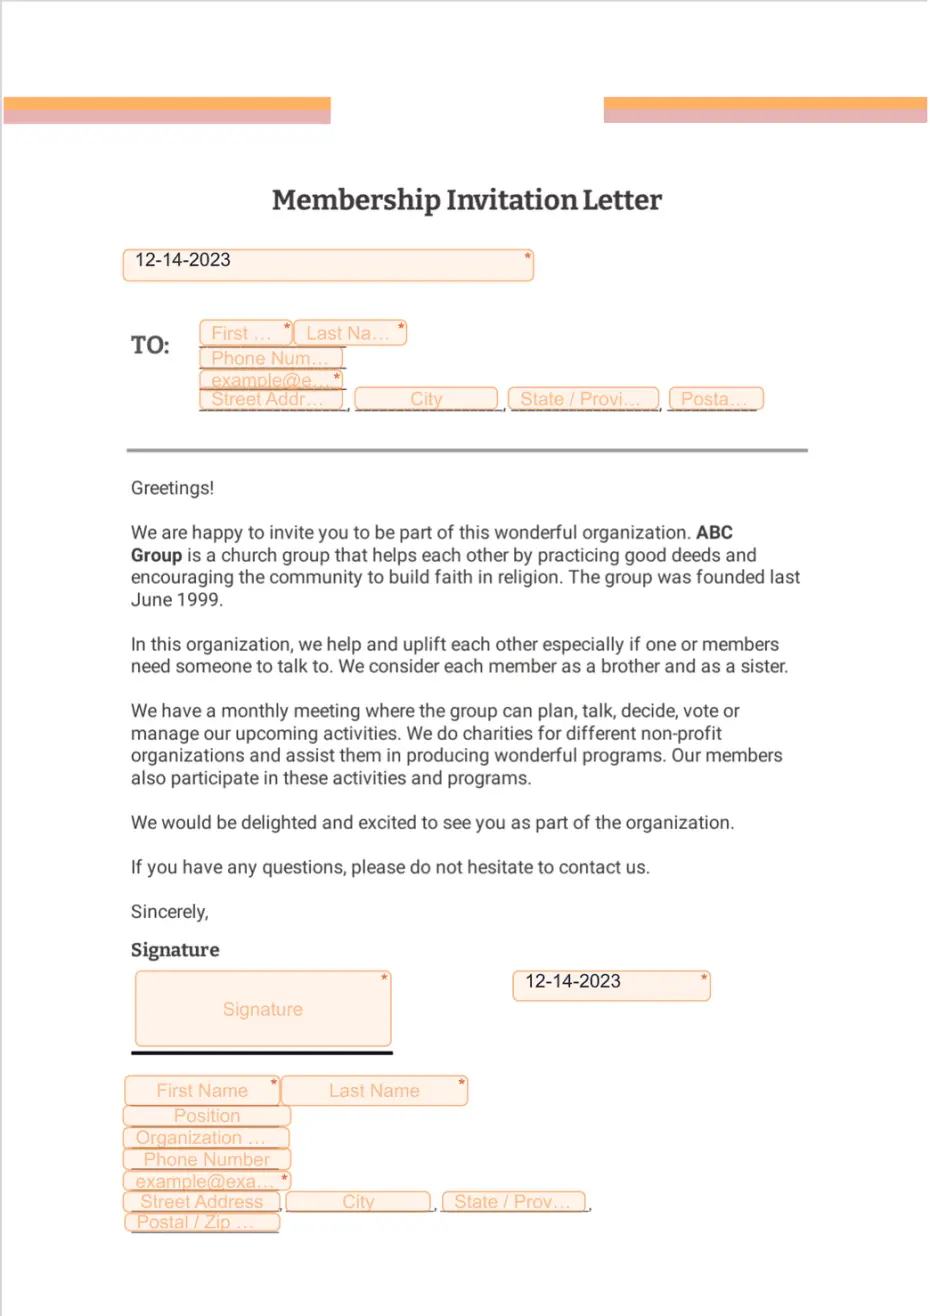 Membership Invitation Letter